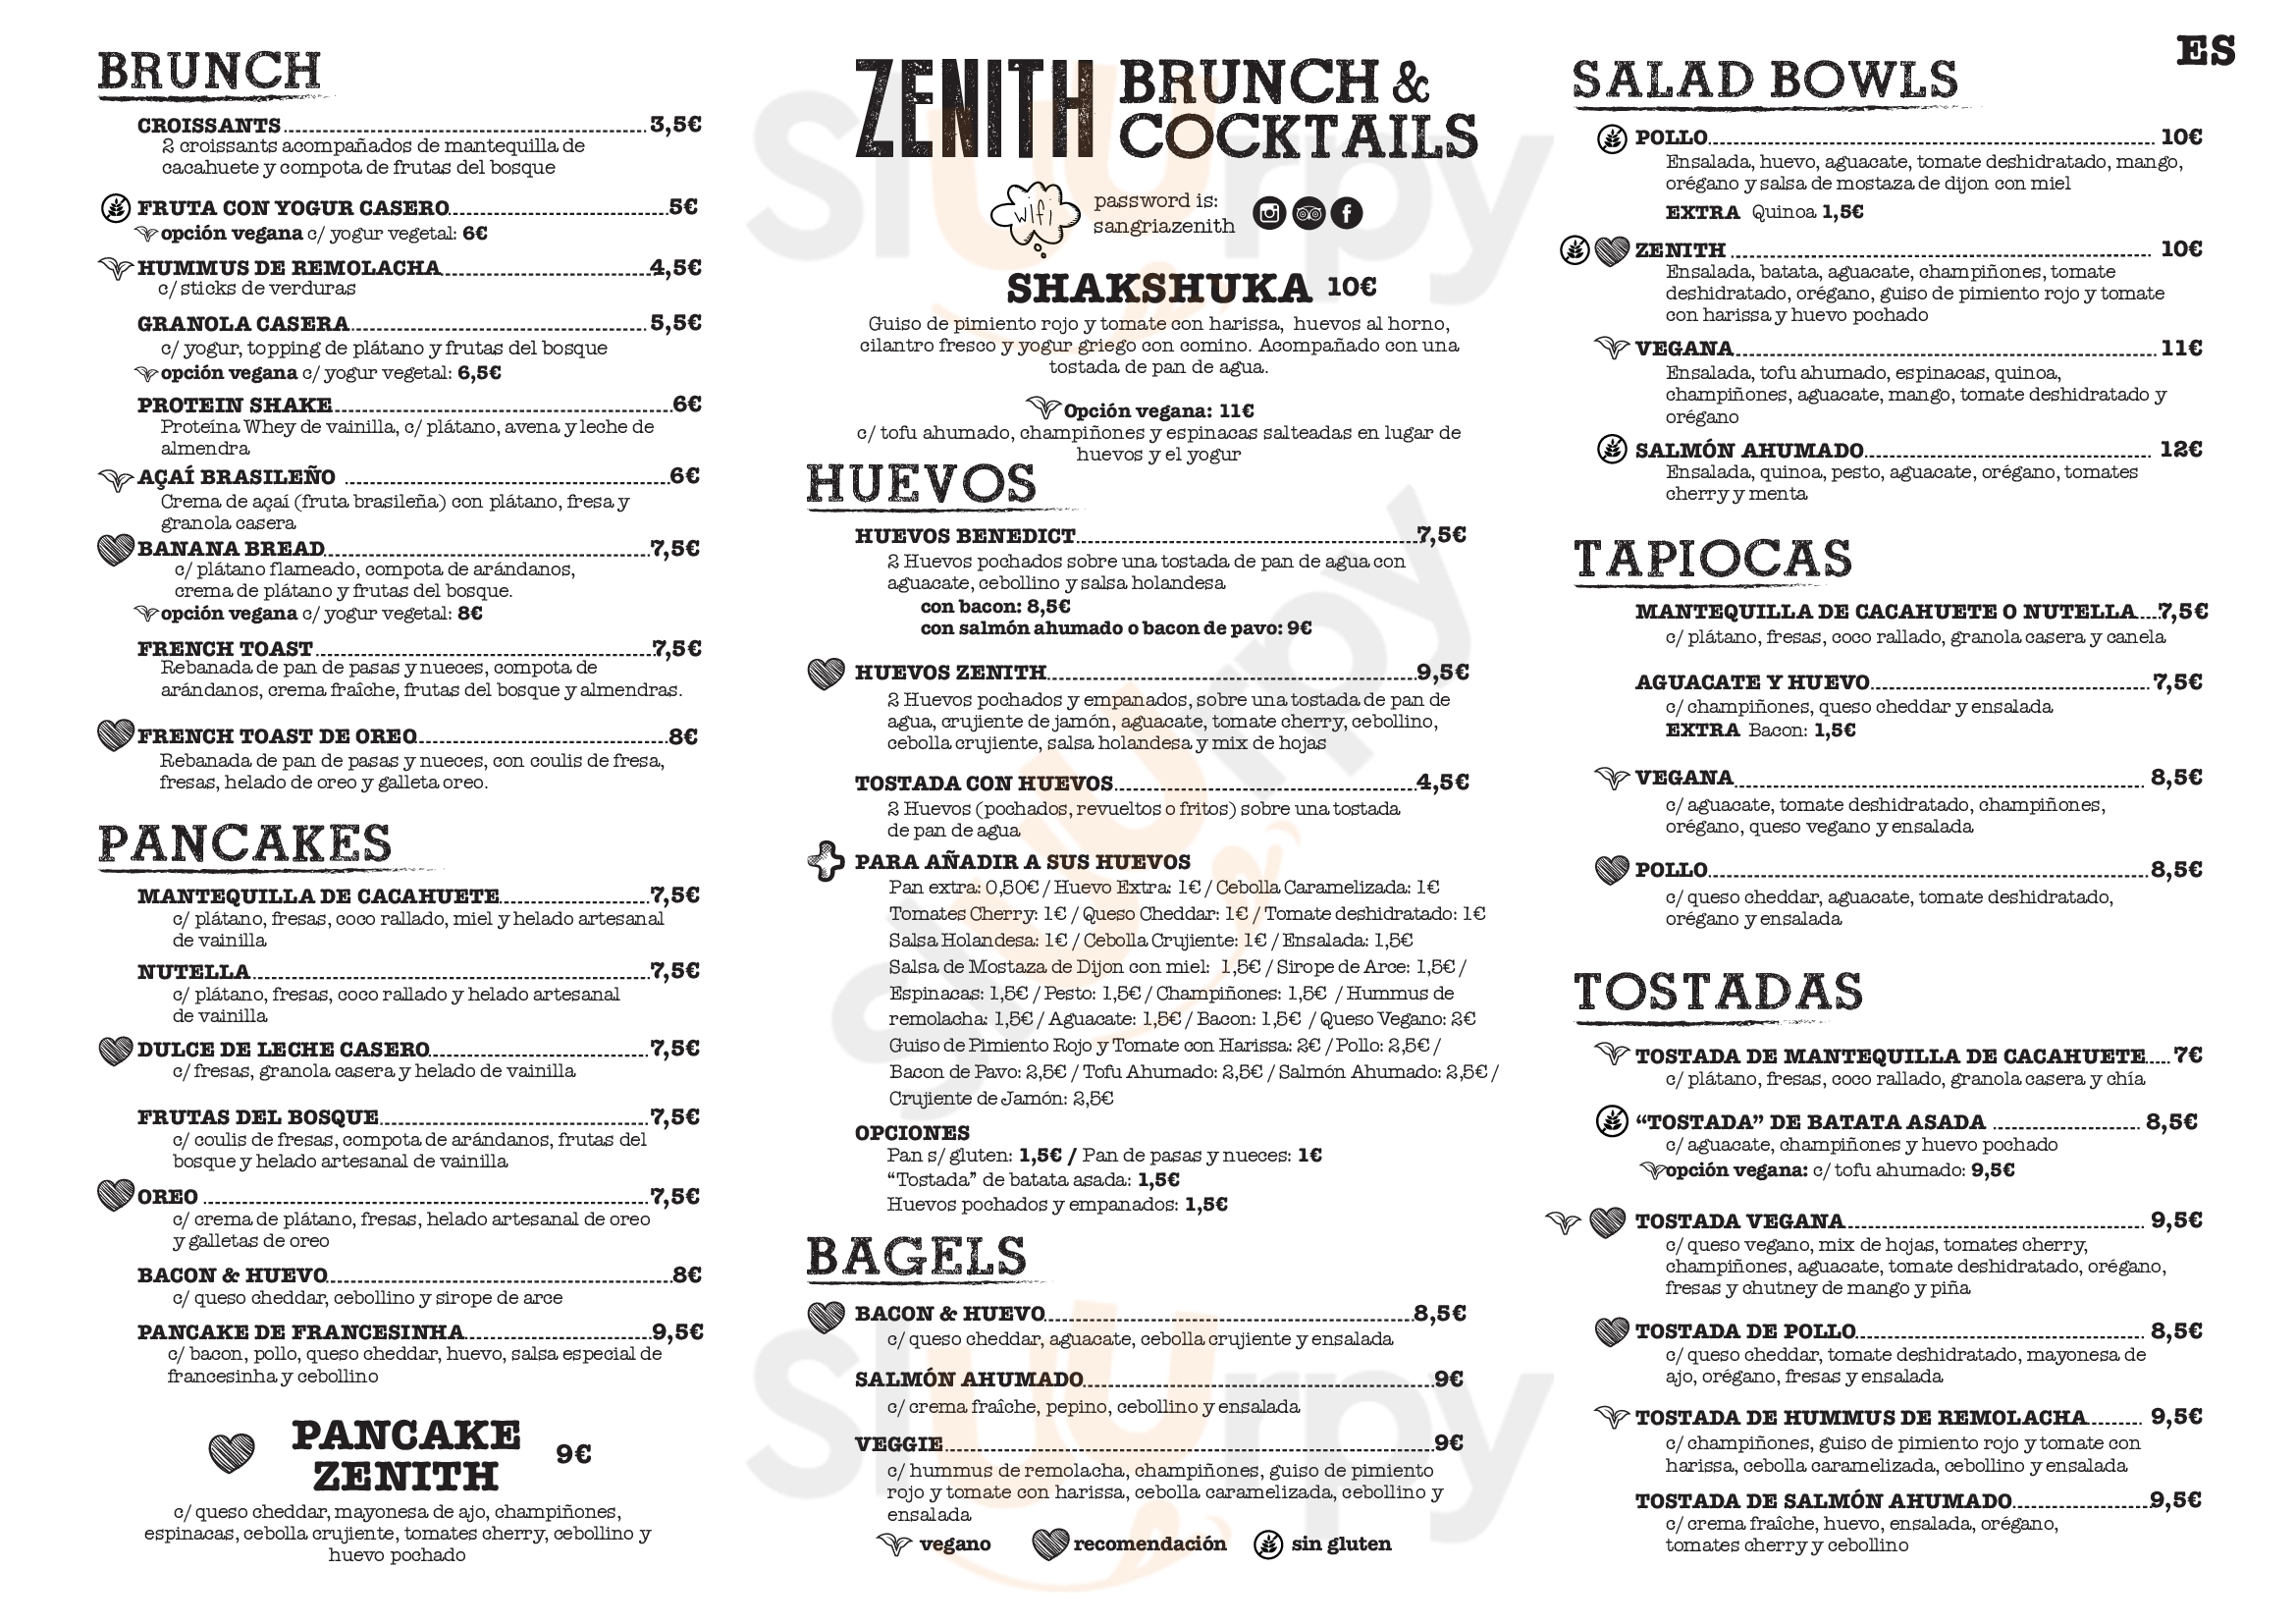 Zenith Brunch & Cocktails Madrid Menu - 1